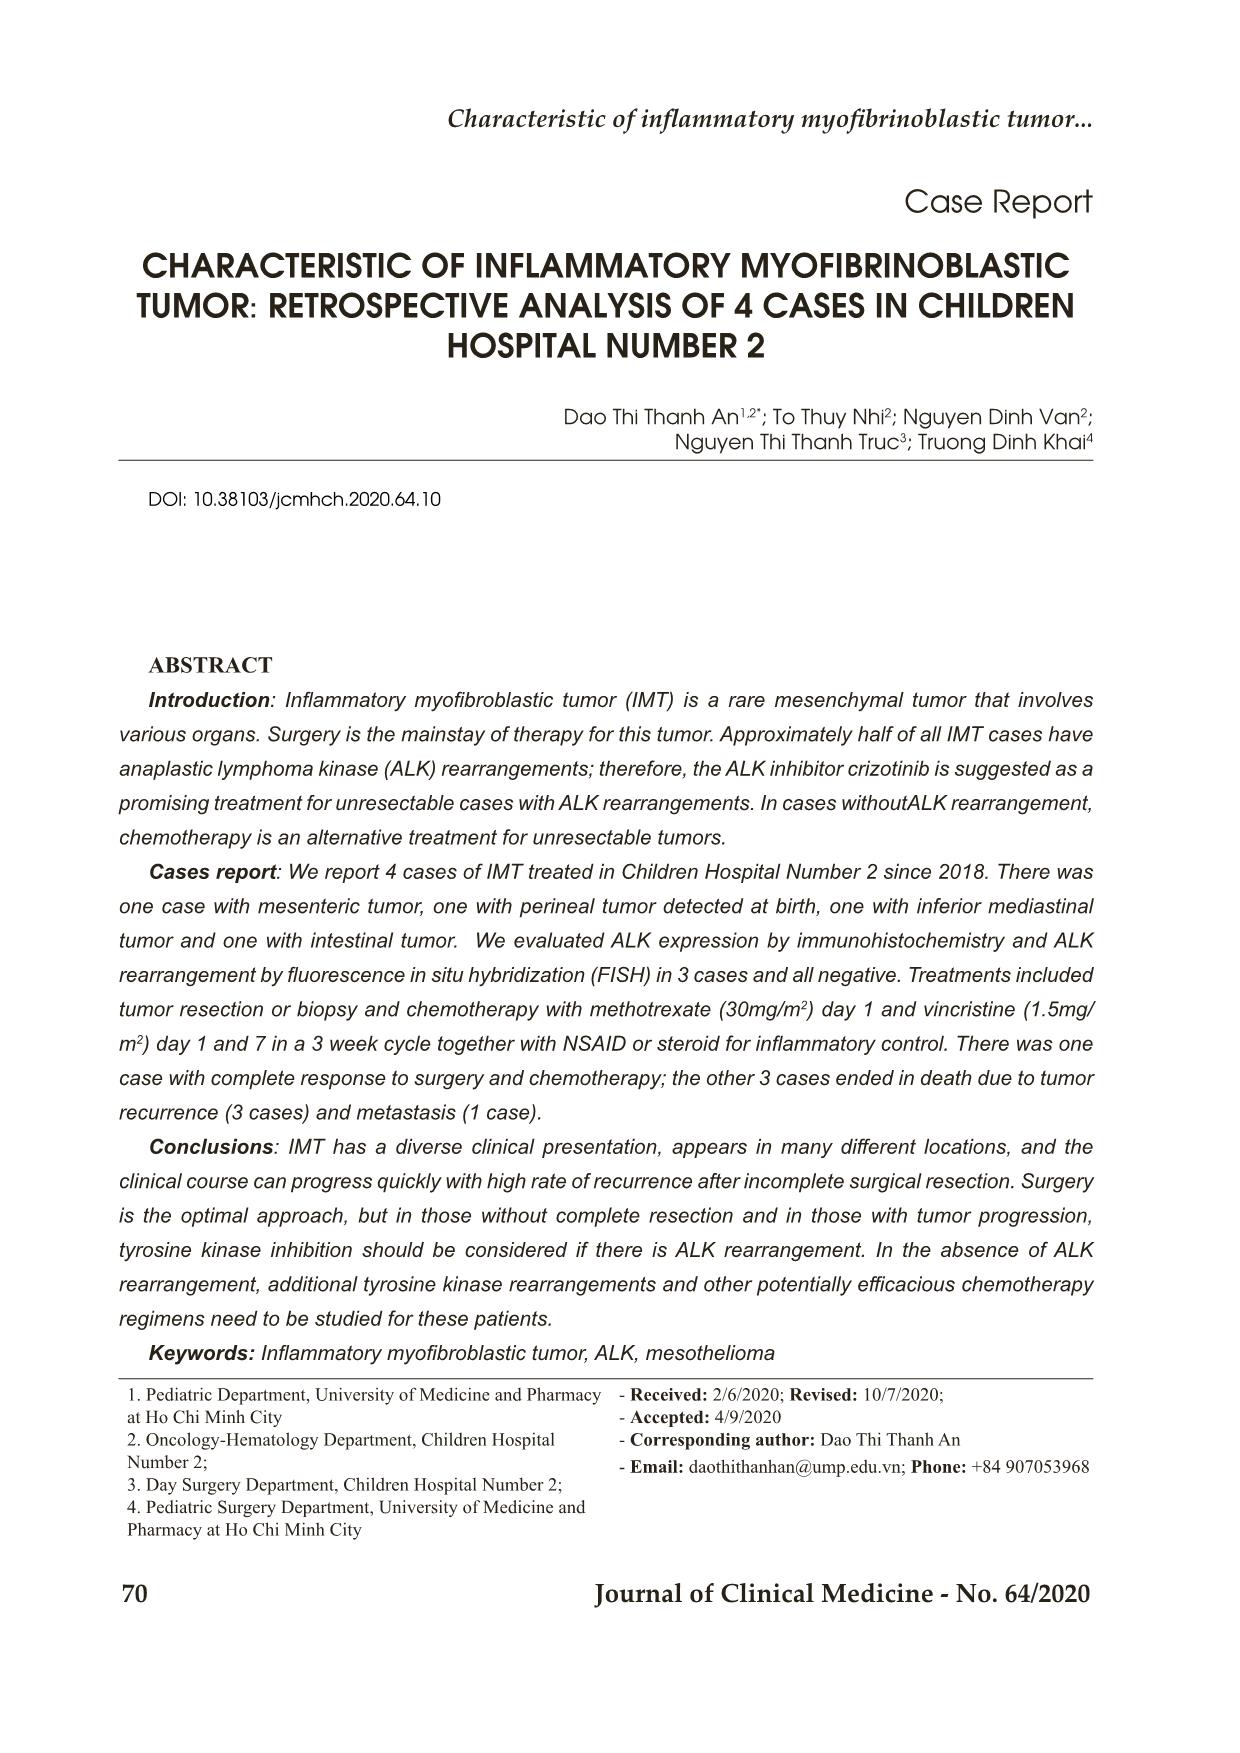 Characteristic of inflammatory myofibrinoblastic tumor: Retrospective analysis of 4 cases in children hospital number 2 trang 1